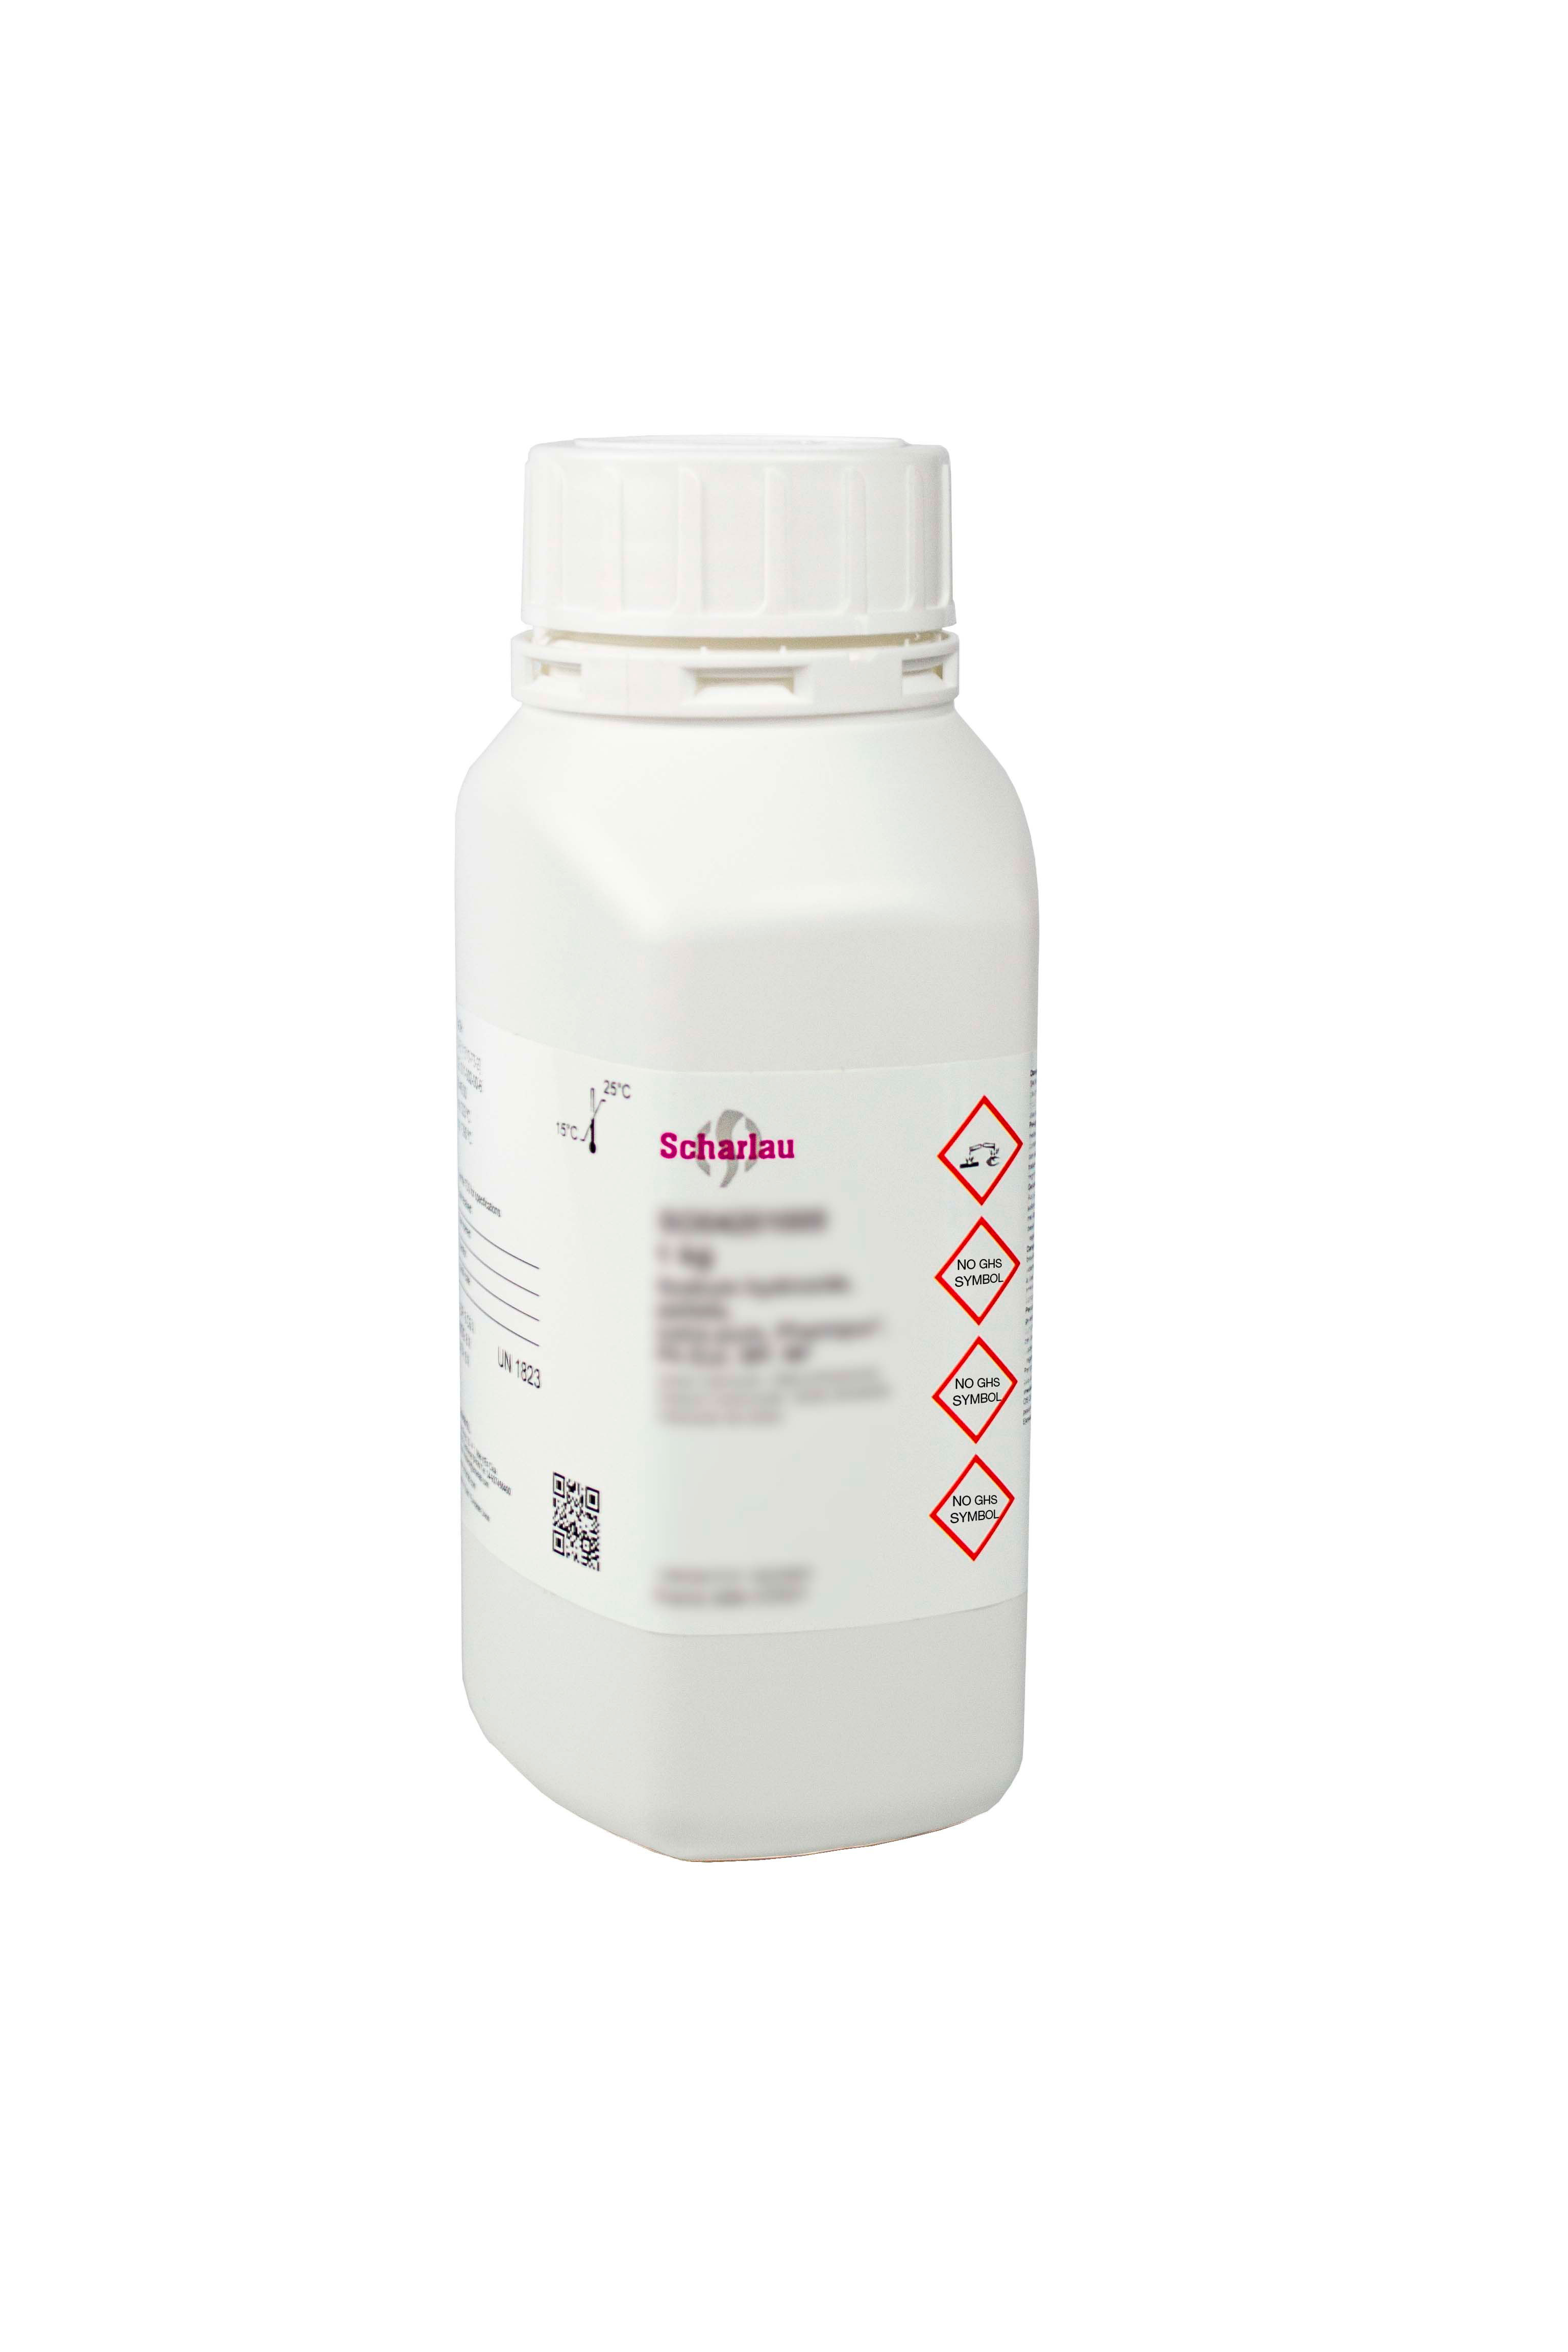 Sodio acetato anhidro, EssentQ®